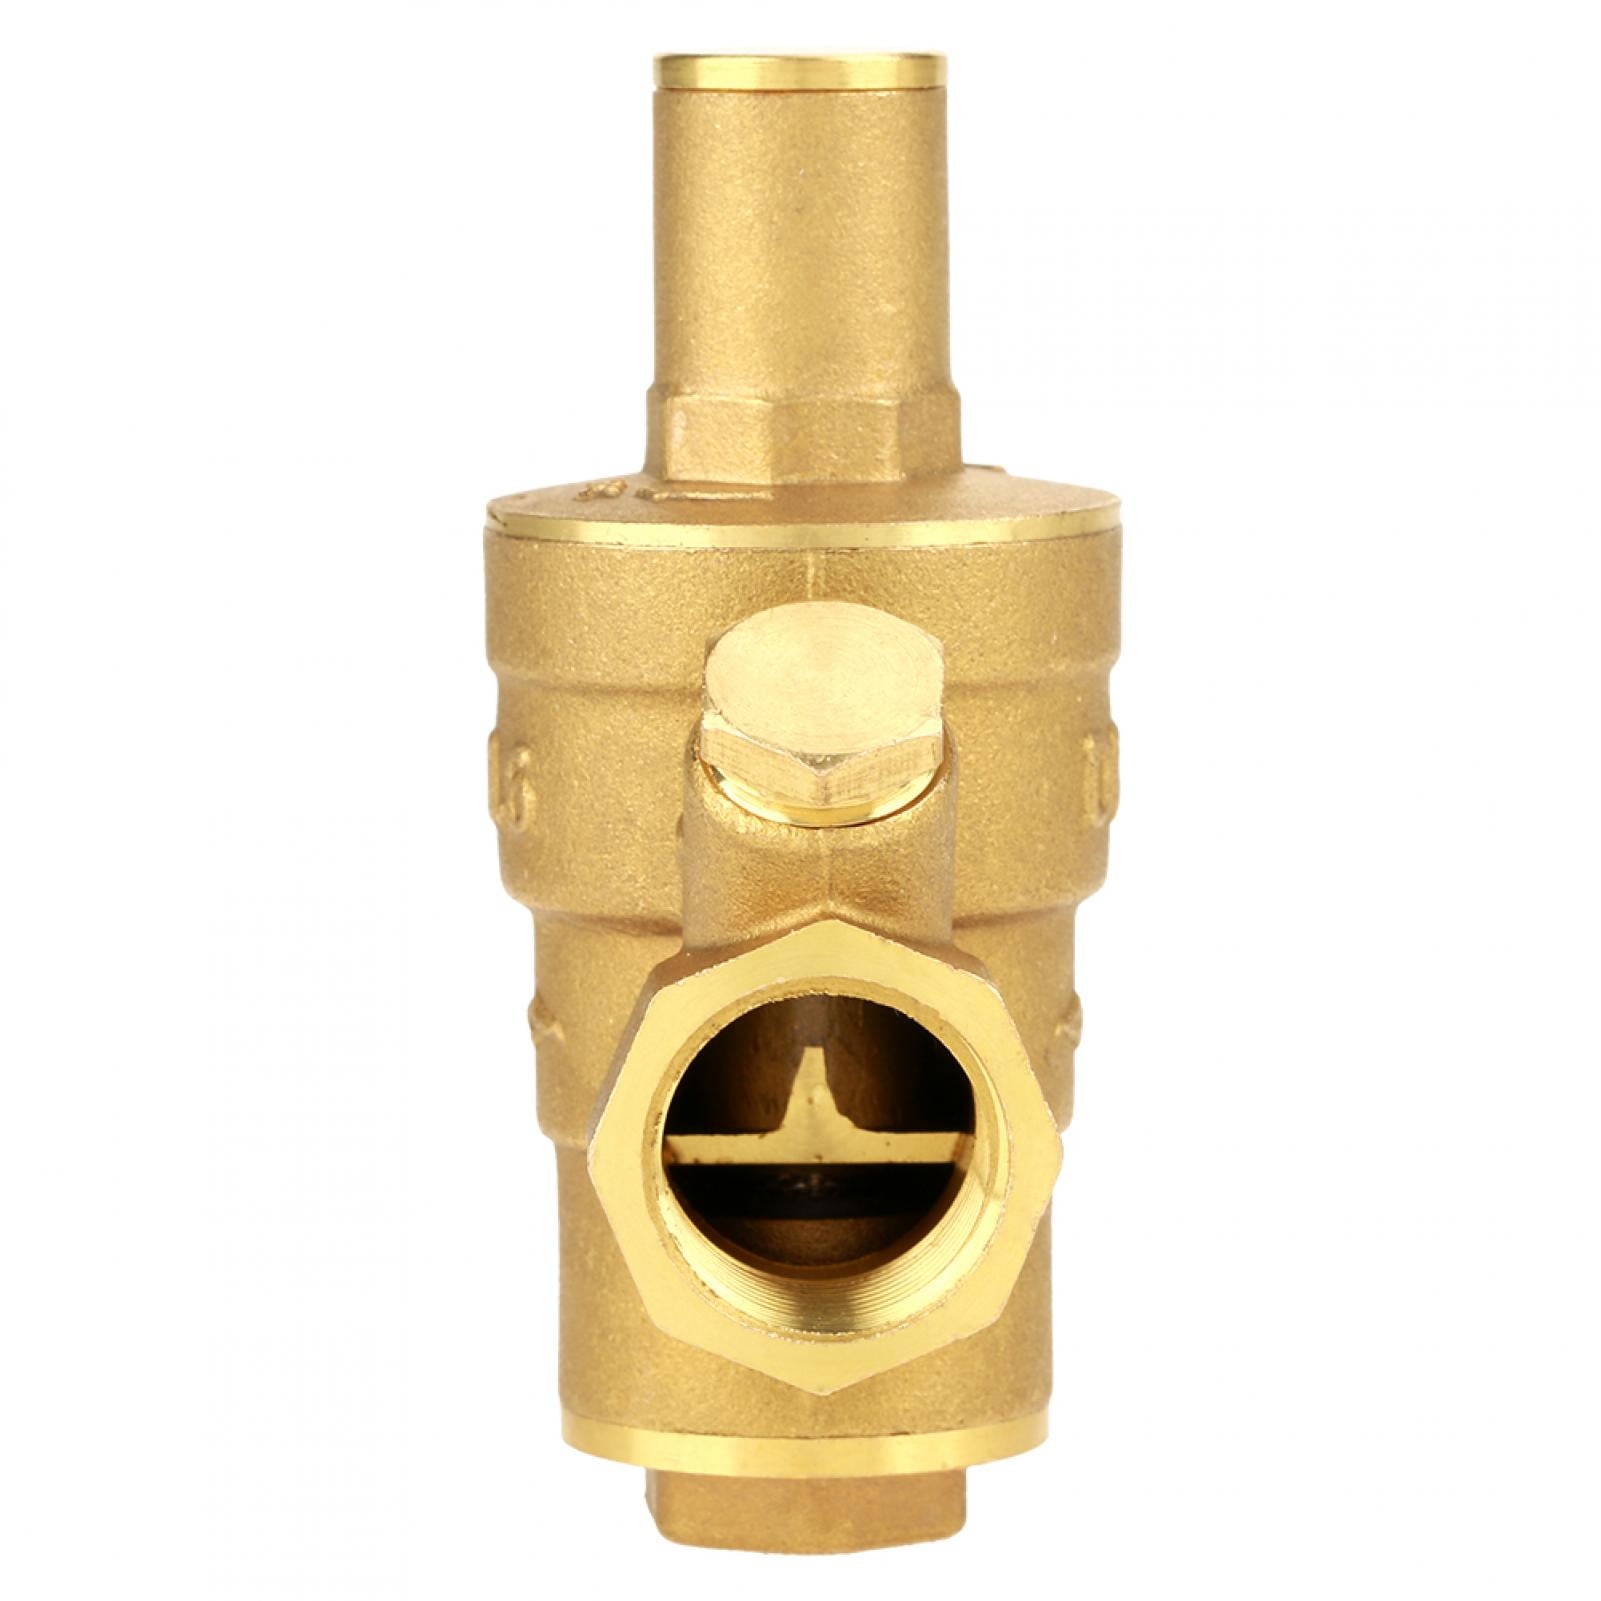 Water Pressure Regulator DN15 Brass Adjustable Pressure Reducer with Gauge Meter 